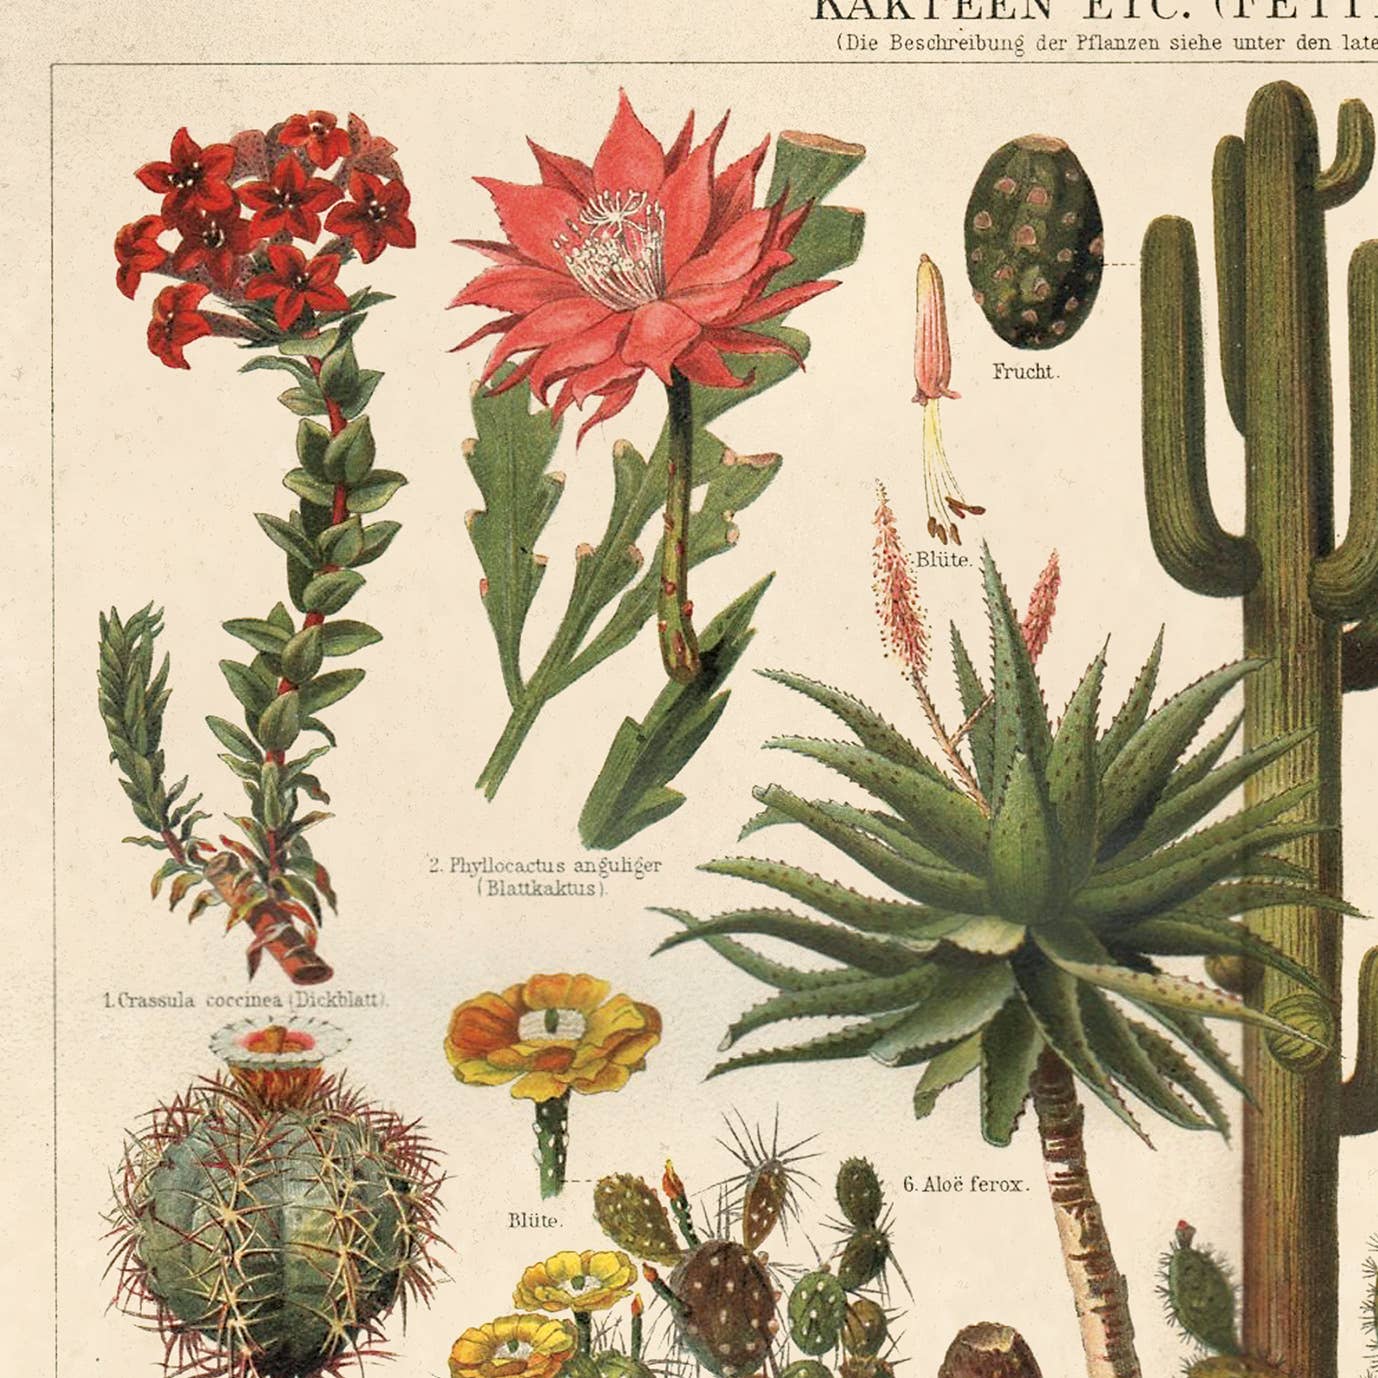 Vintage Botanical Cactus Kakteen Chart Print